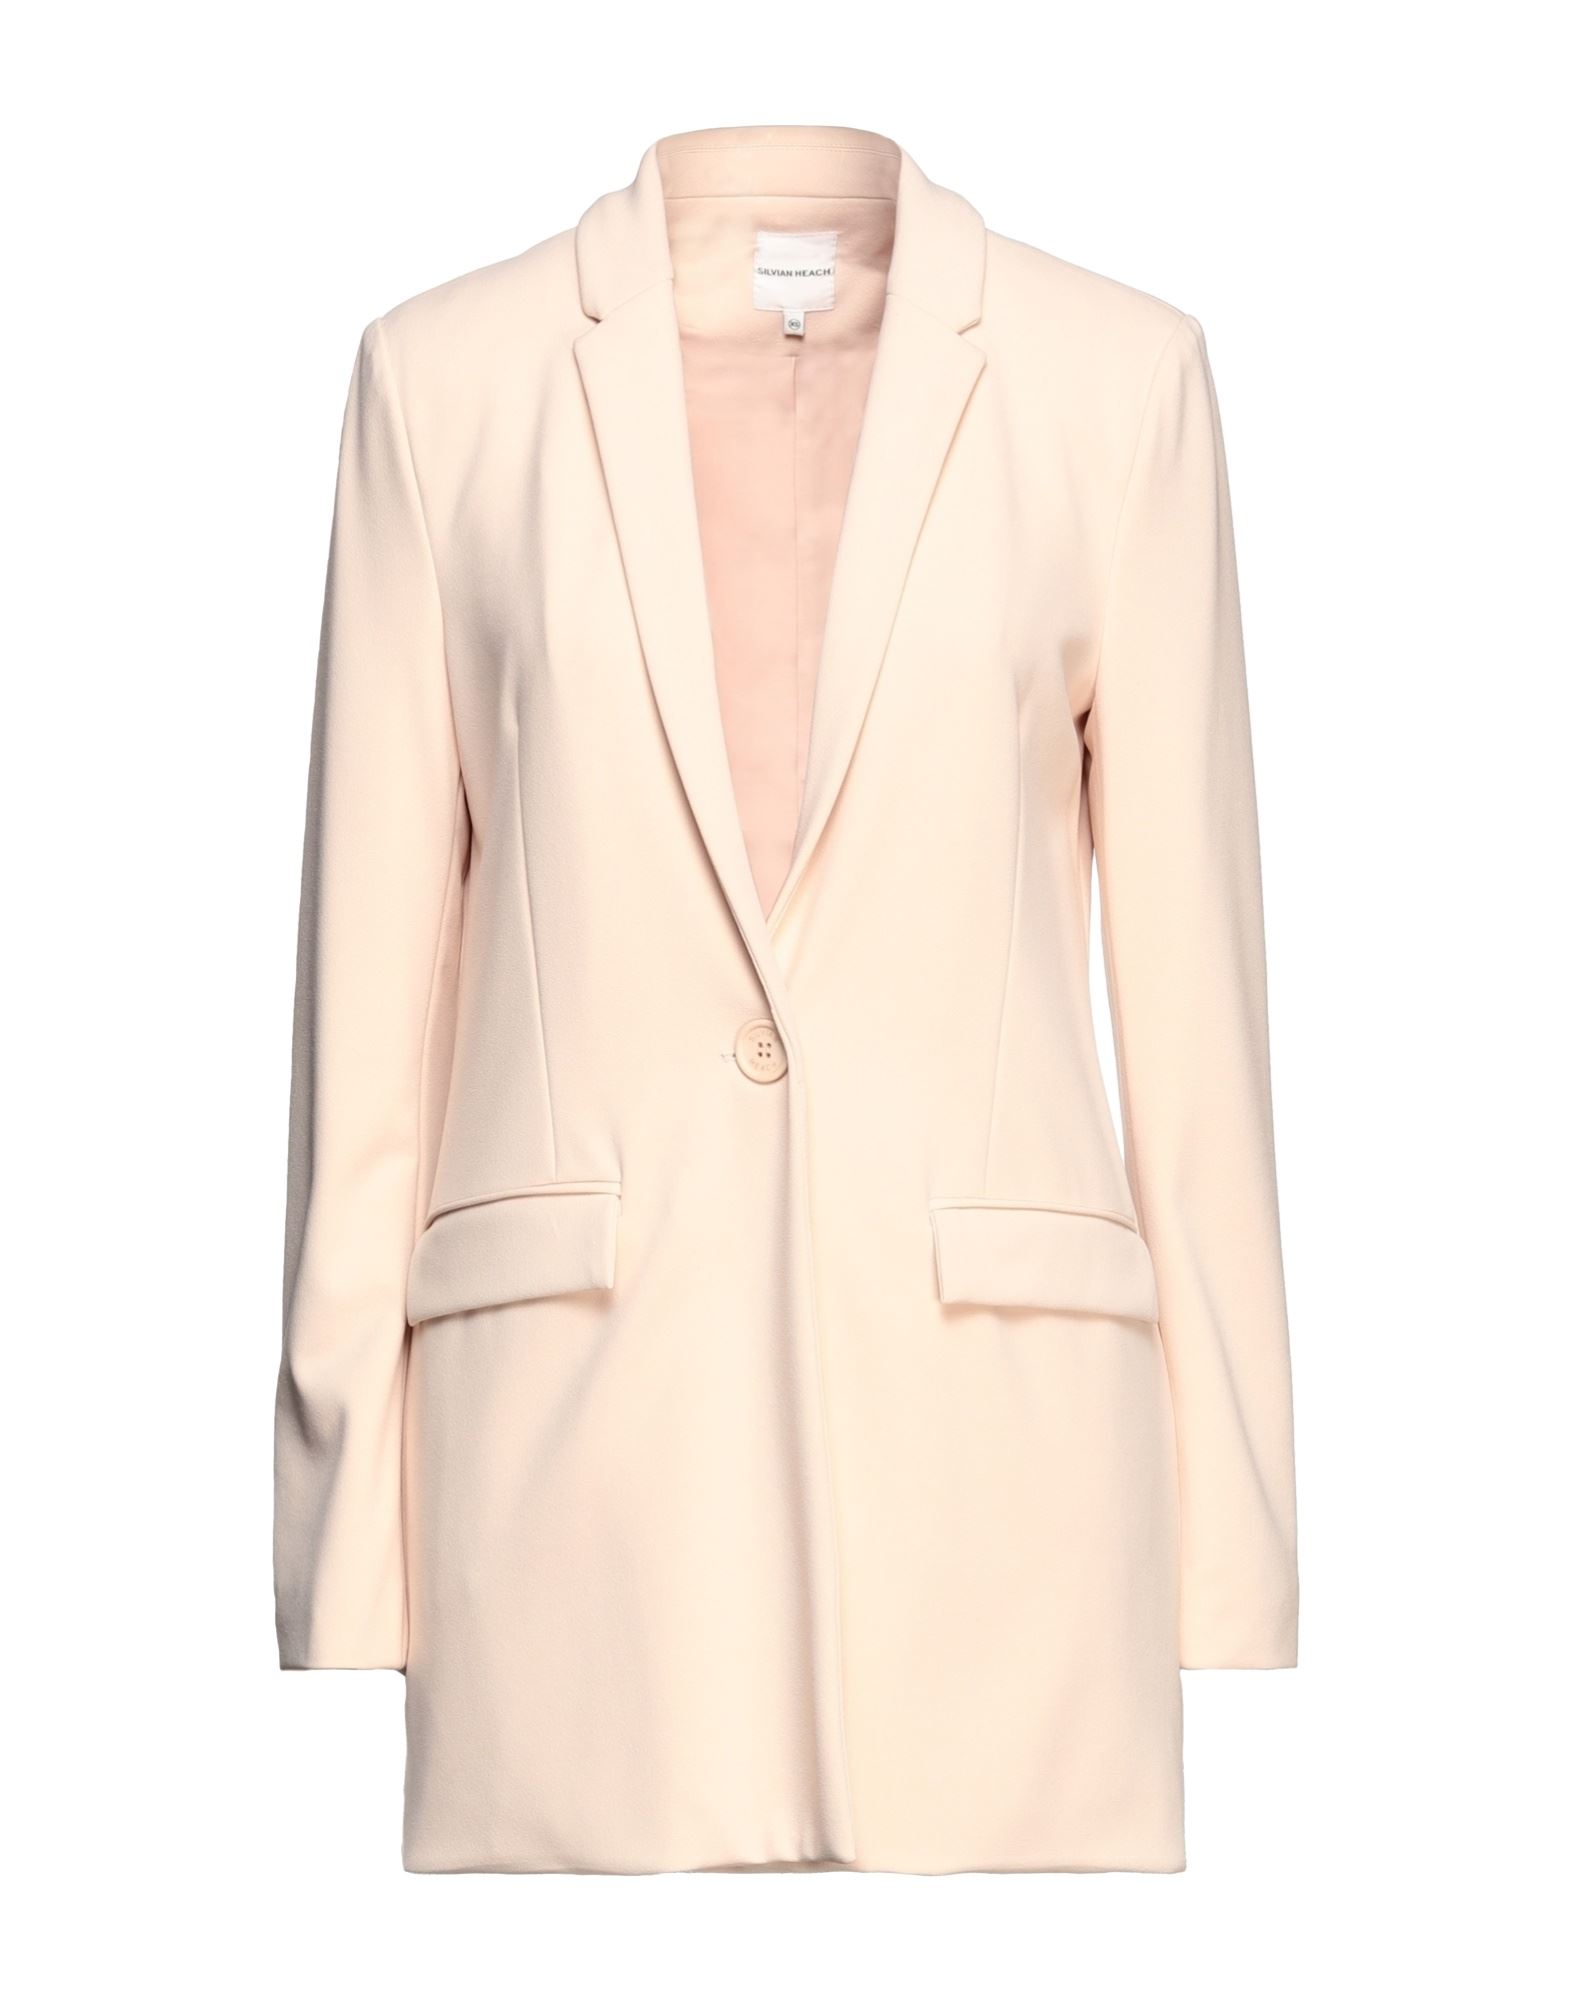 Silvian Heach Suit Jackets In Light Pink